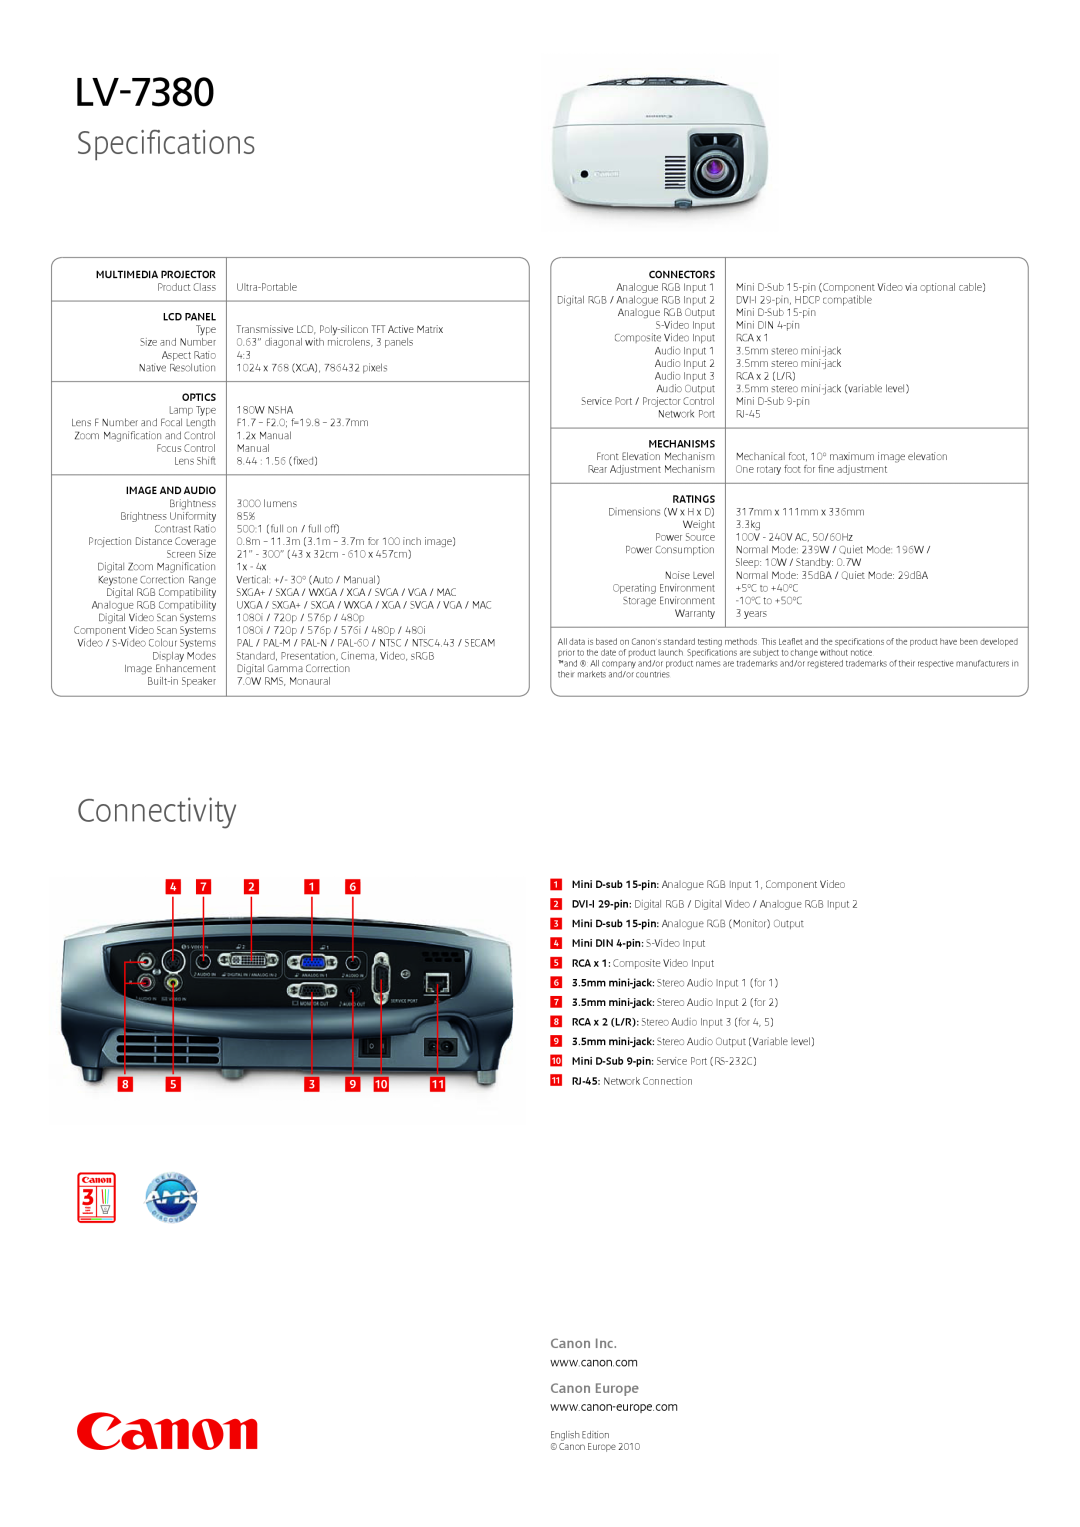 Canon LV-7380 warranty Specifications, Connectivity, Canon Inc, Canon Europe 